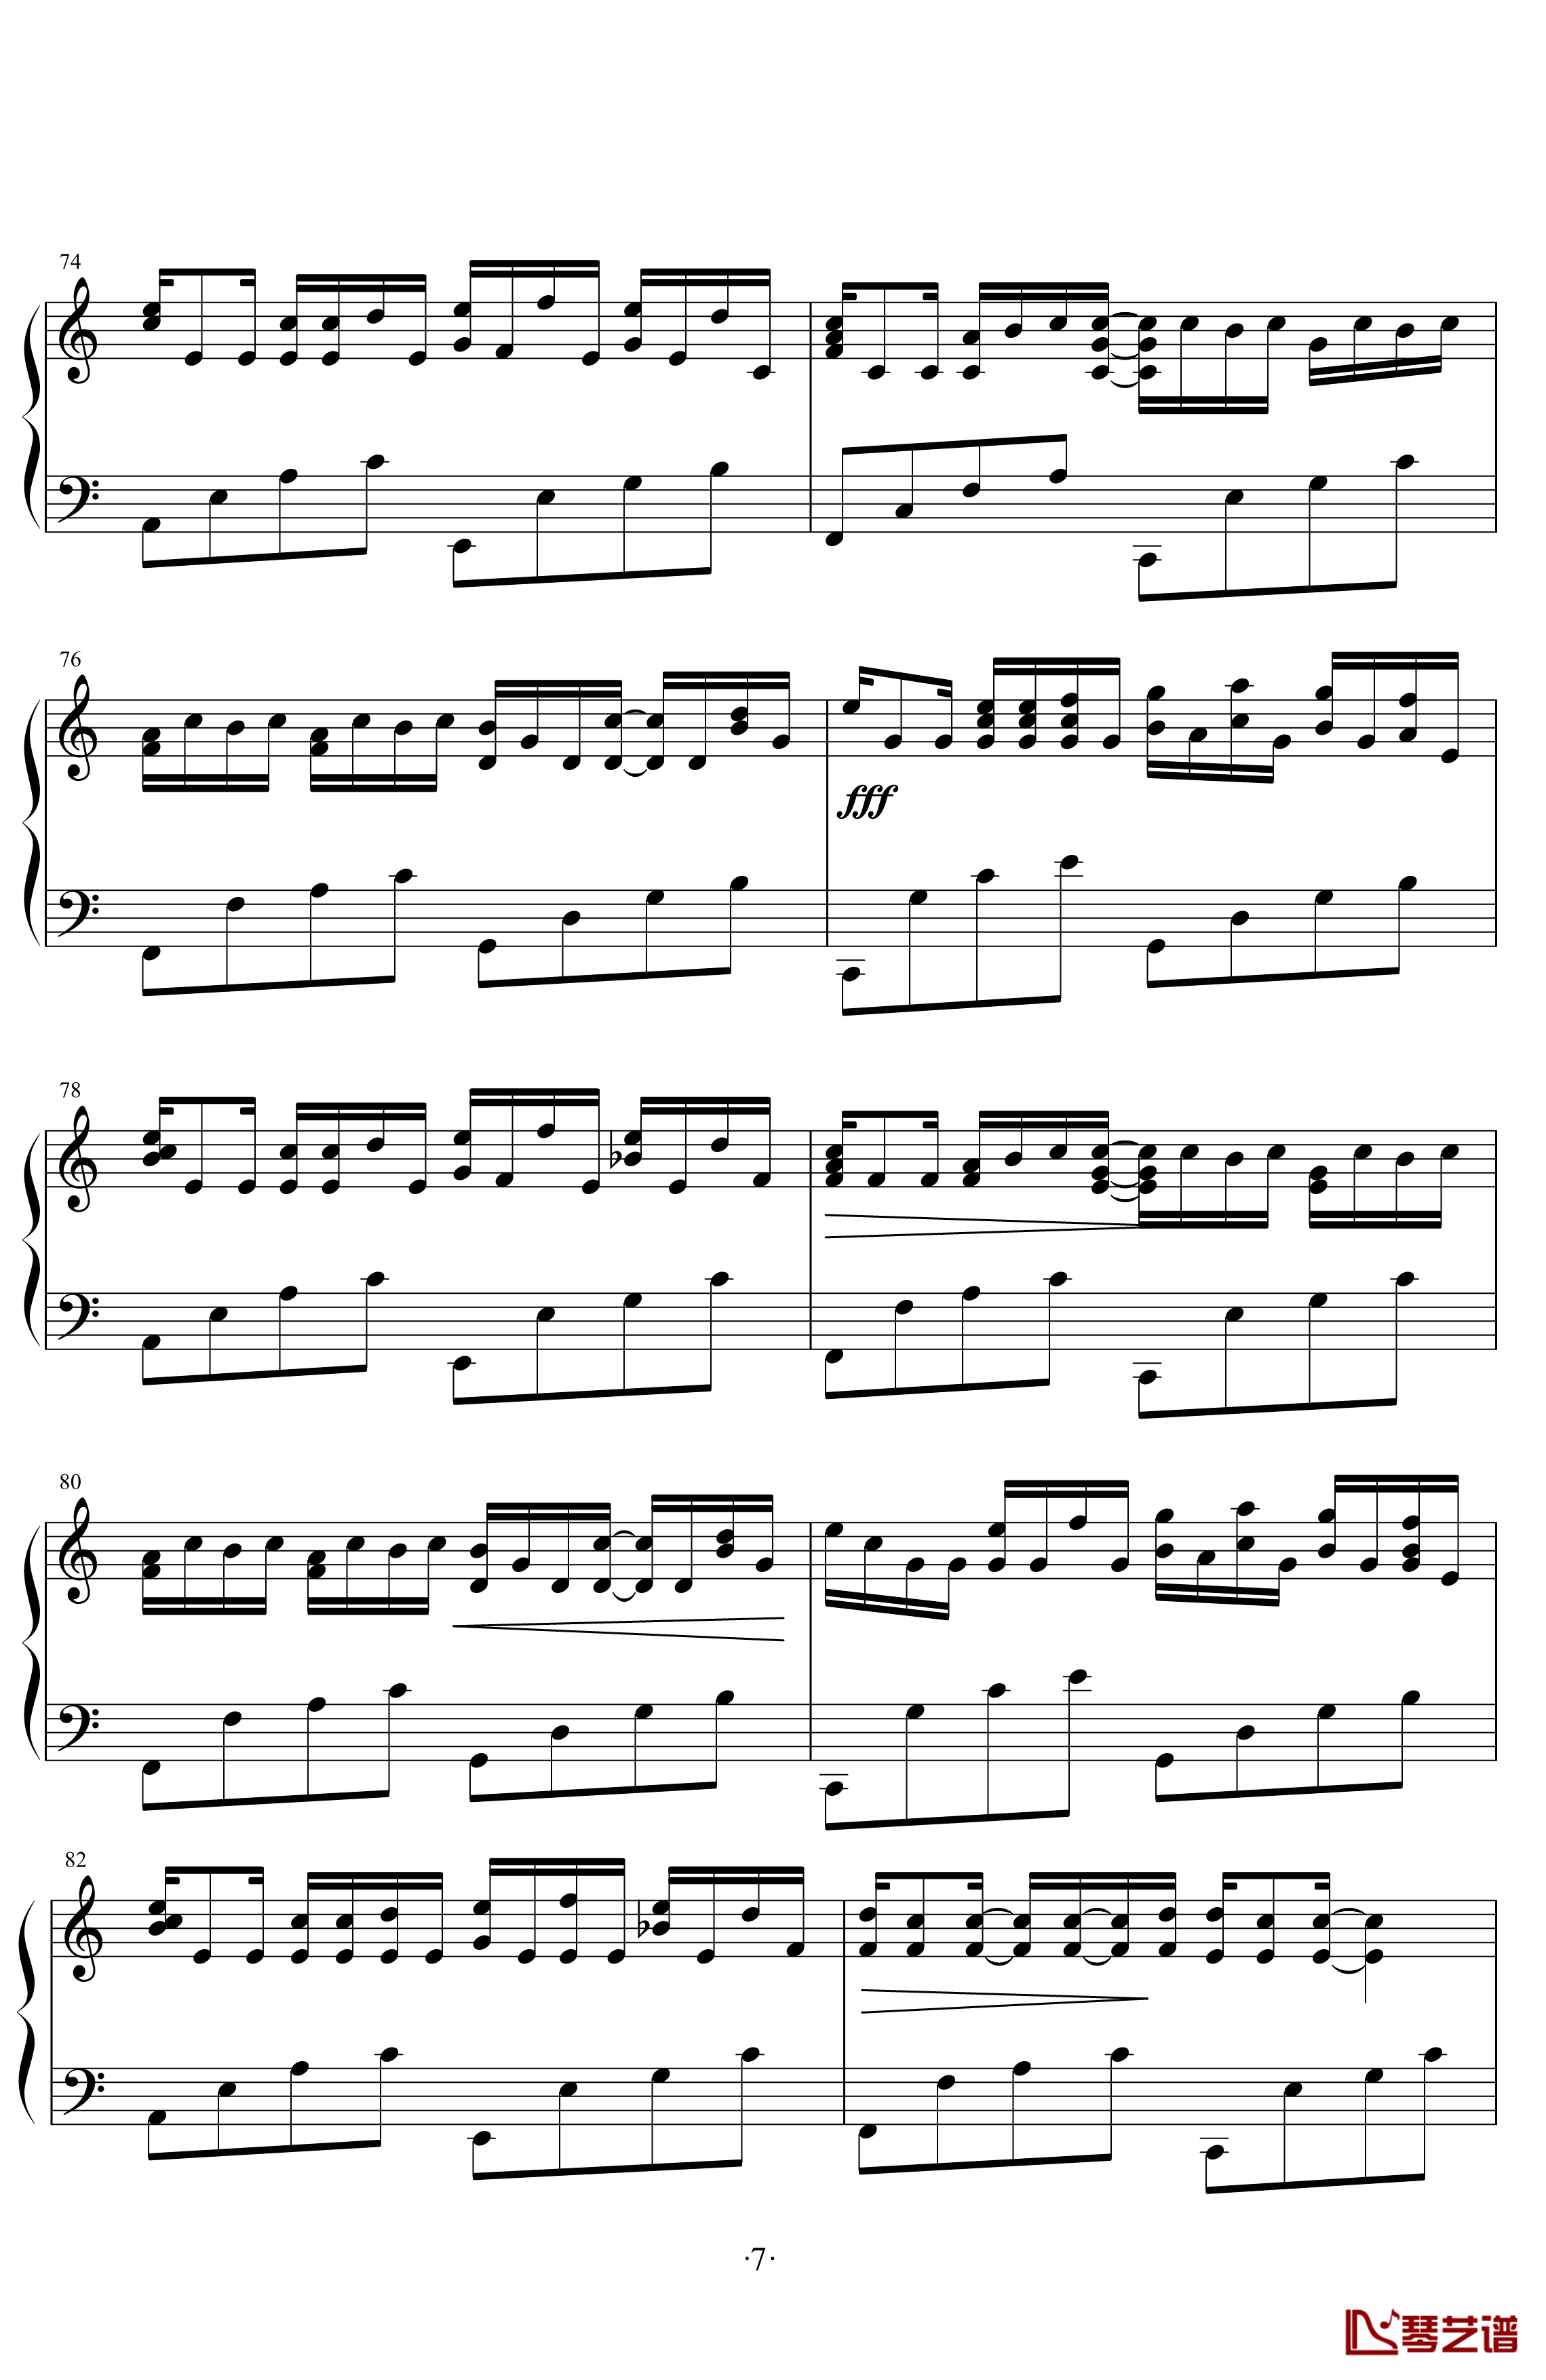 卡农变奏曲钢琴谱-Variations on the Canon by Pachelbel V.L.最终定本-George Winston7